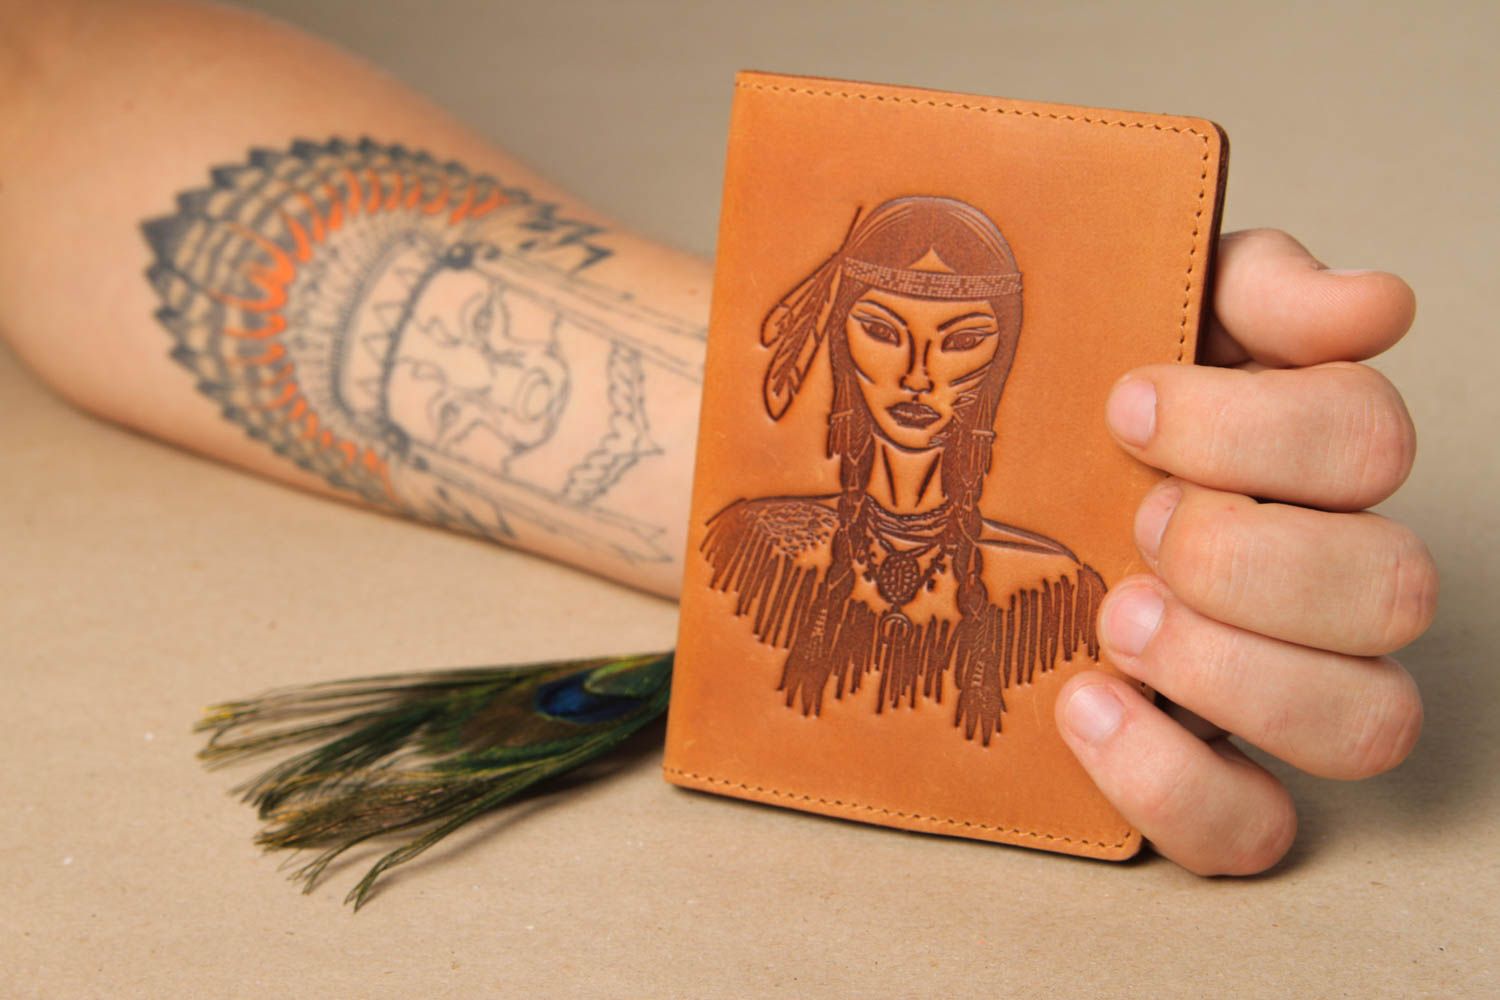 Unusual handmade passport cover leather goods handmade accessories gift ideas photo 1